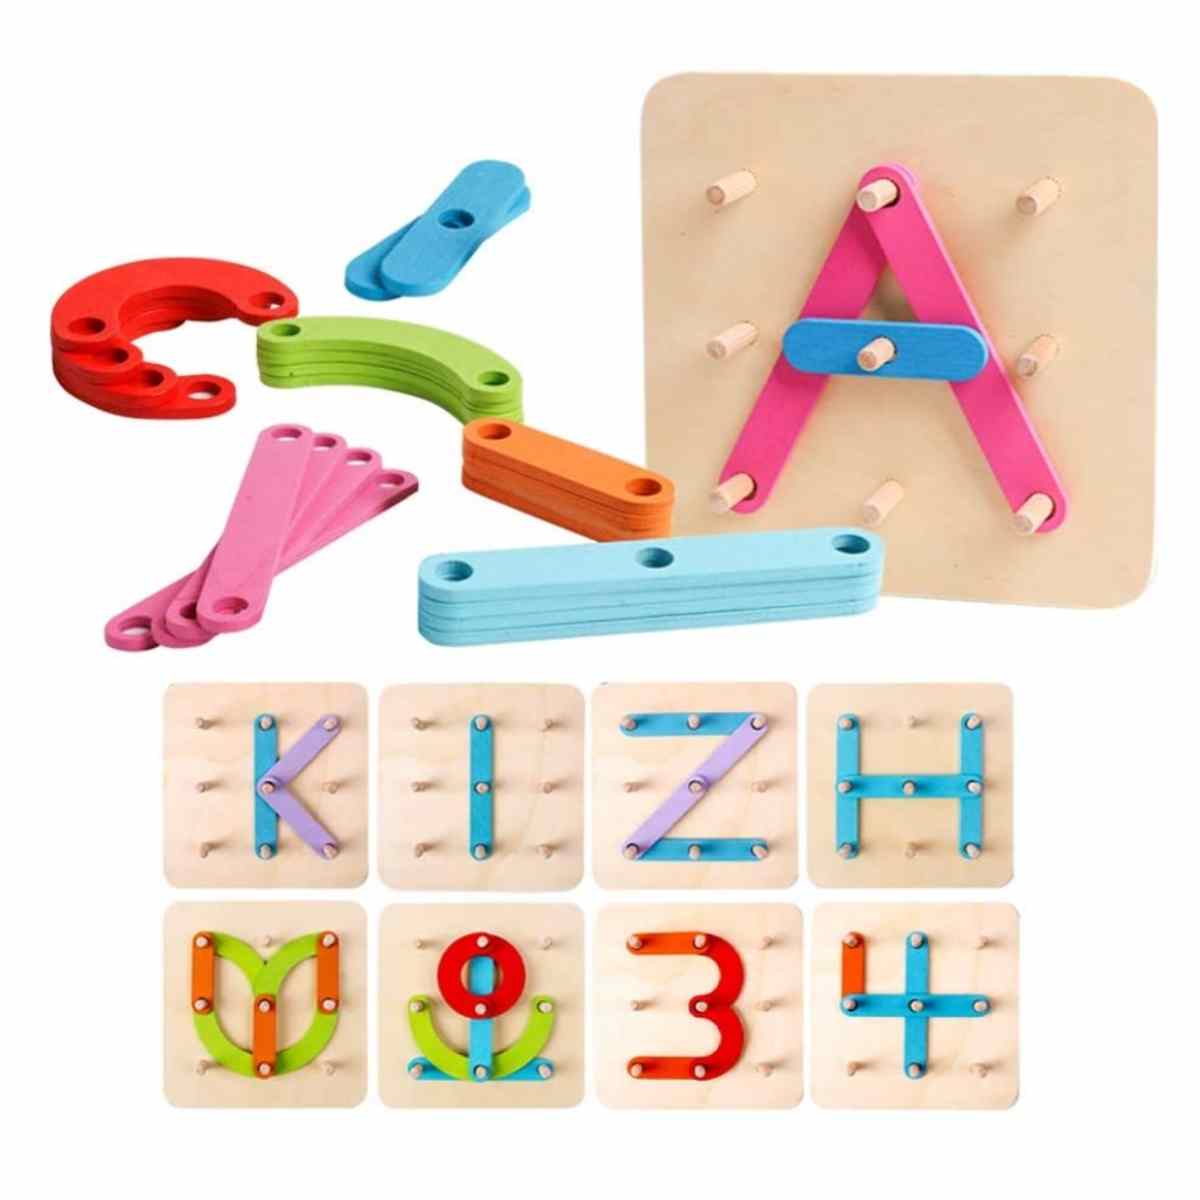 Kizh Wooden Letter and Number Construction set